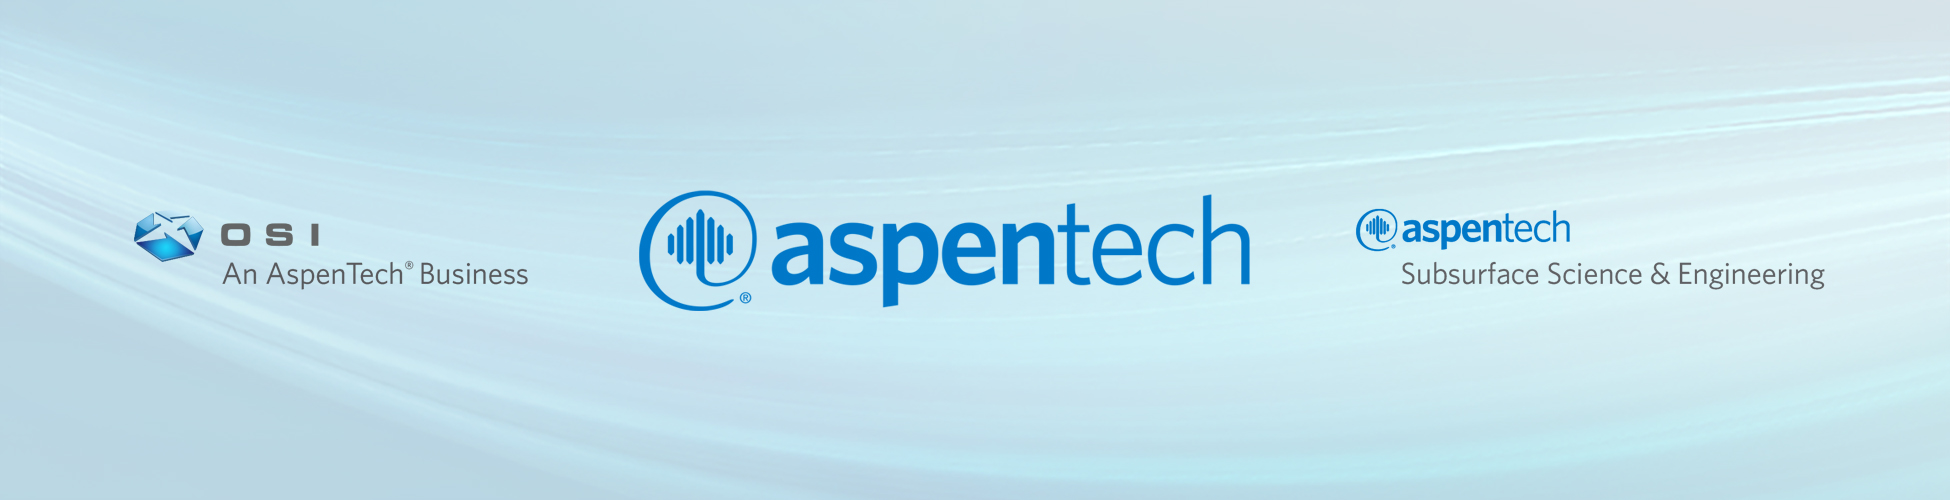 Aspentech-logo-osi-logo-combined-banner-image